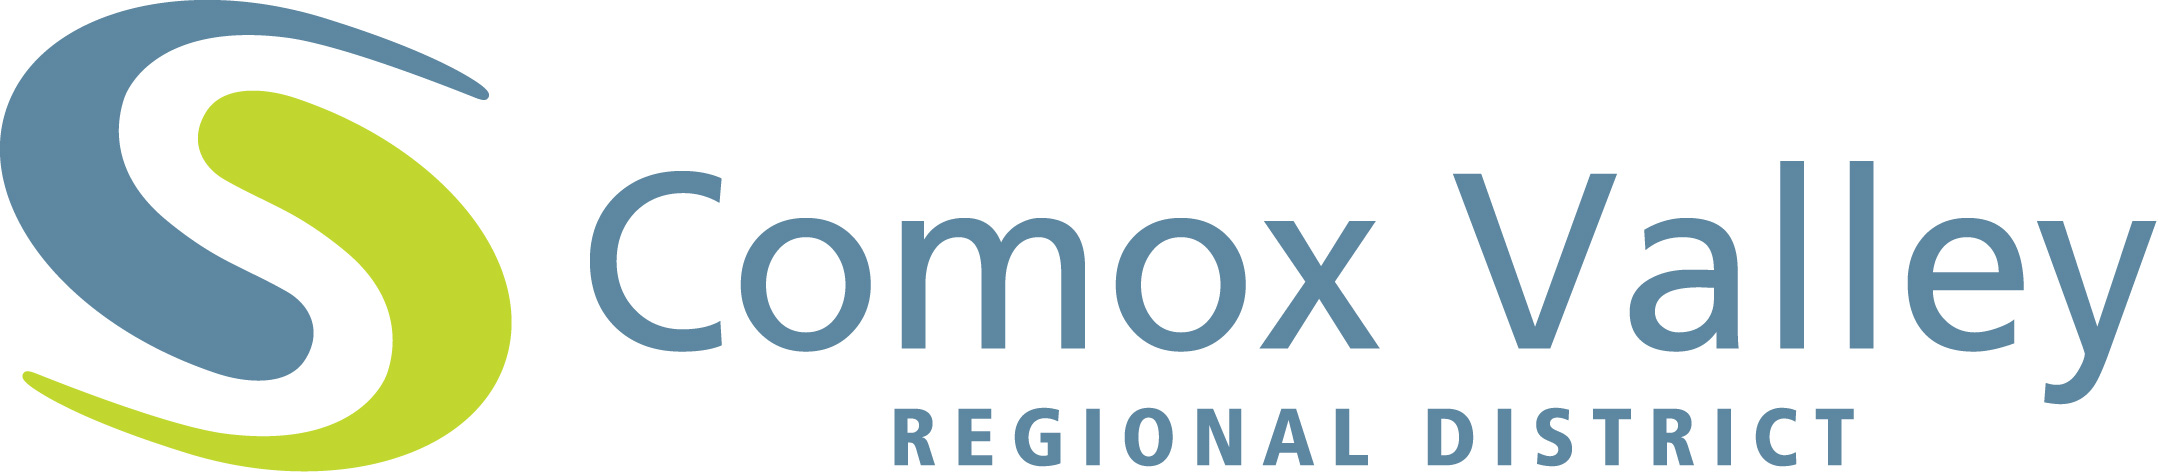 Comox Valley Regional District logo